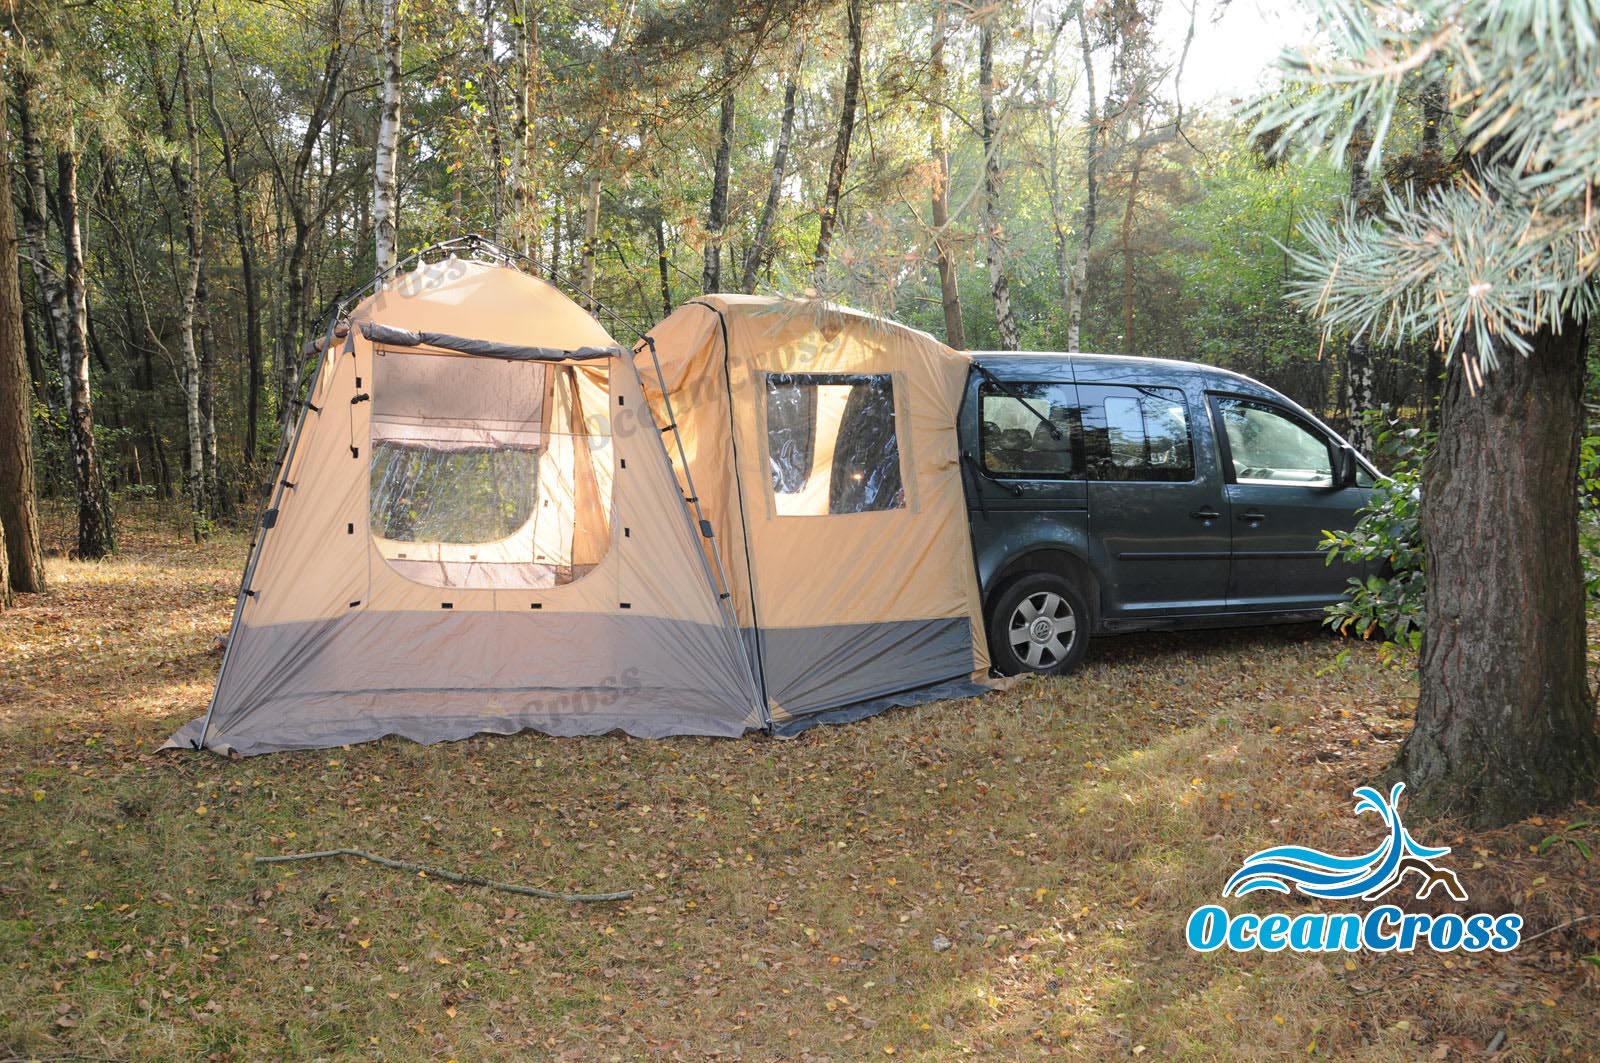 Heckzelt Autozelt passend für VW Caddy 5, Ford Connect 3 - Camping Outdoor  Zelt 